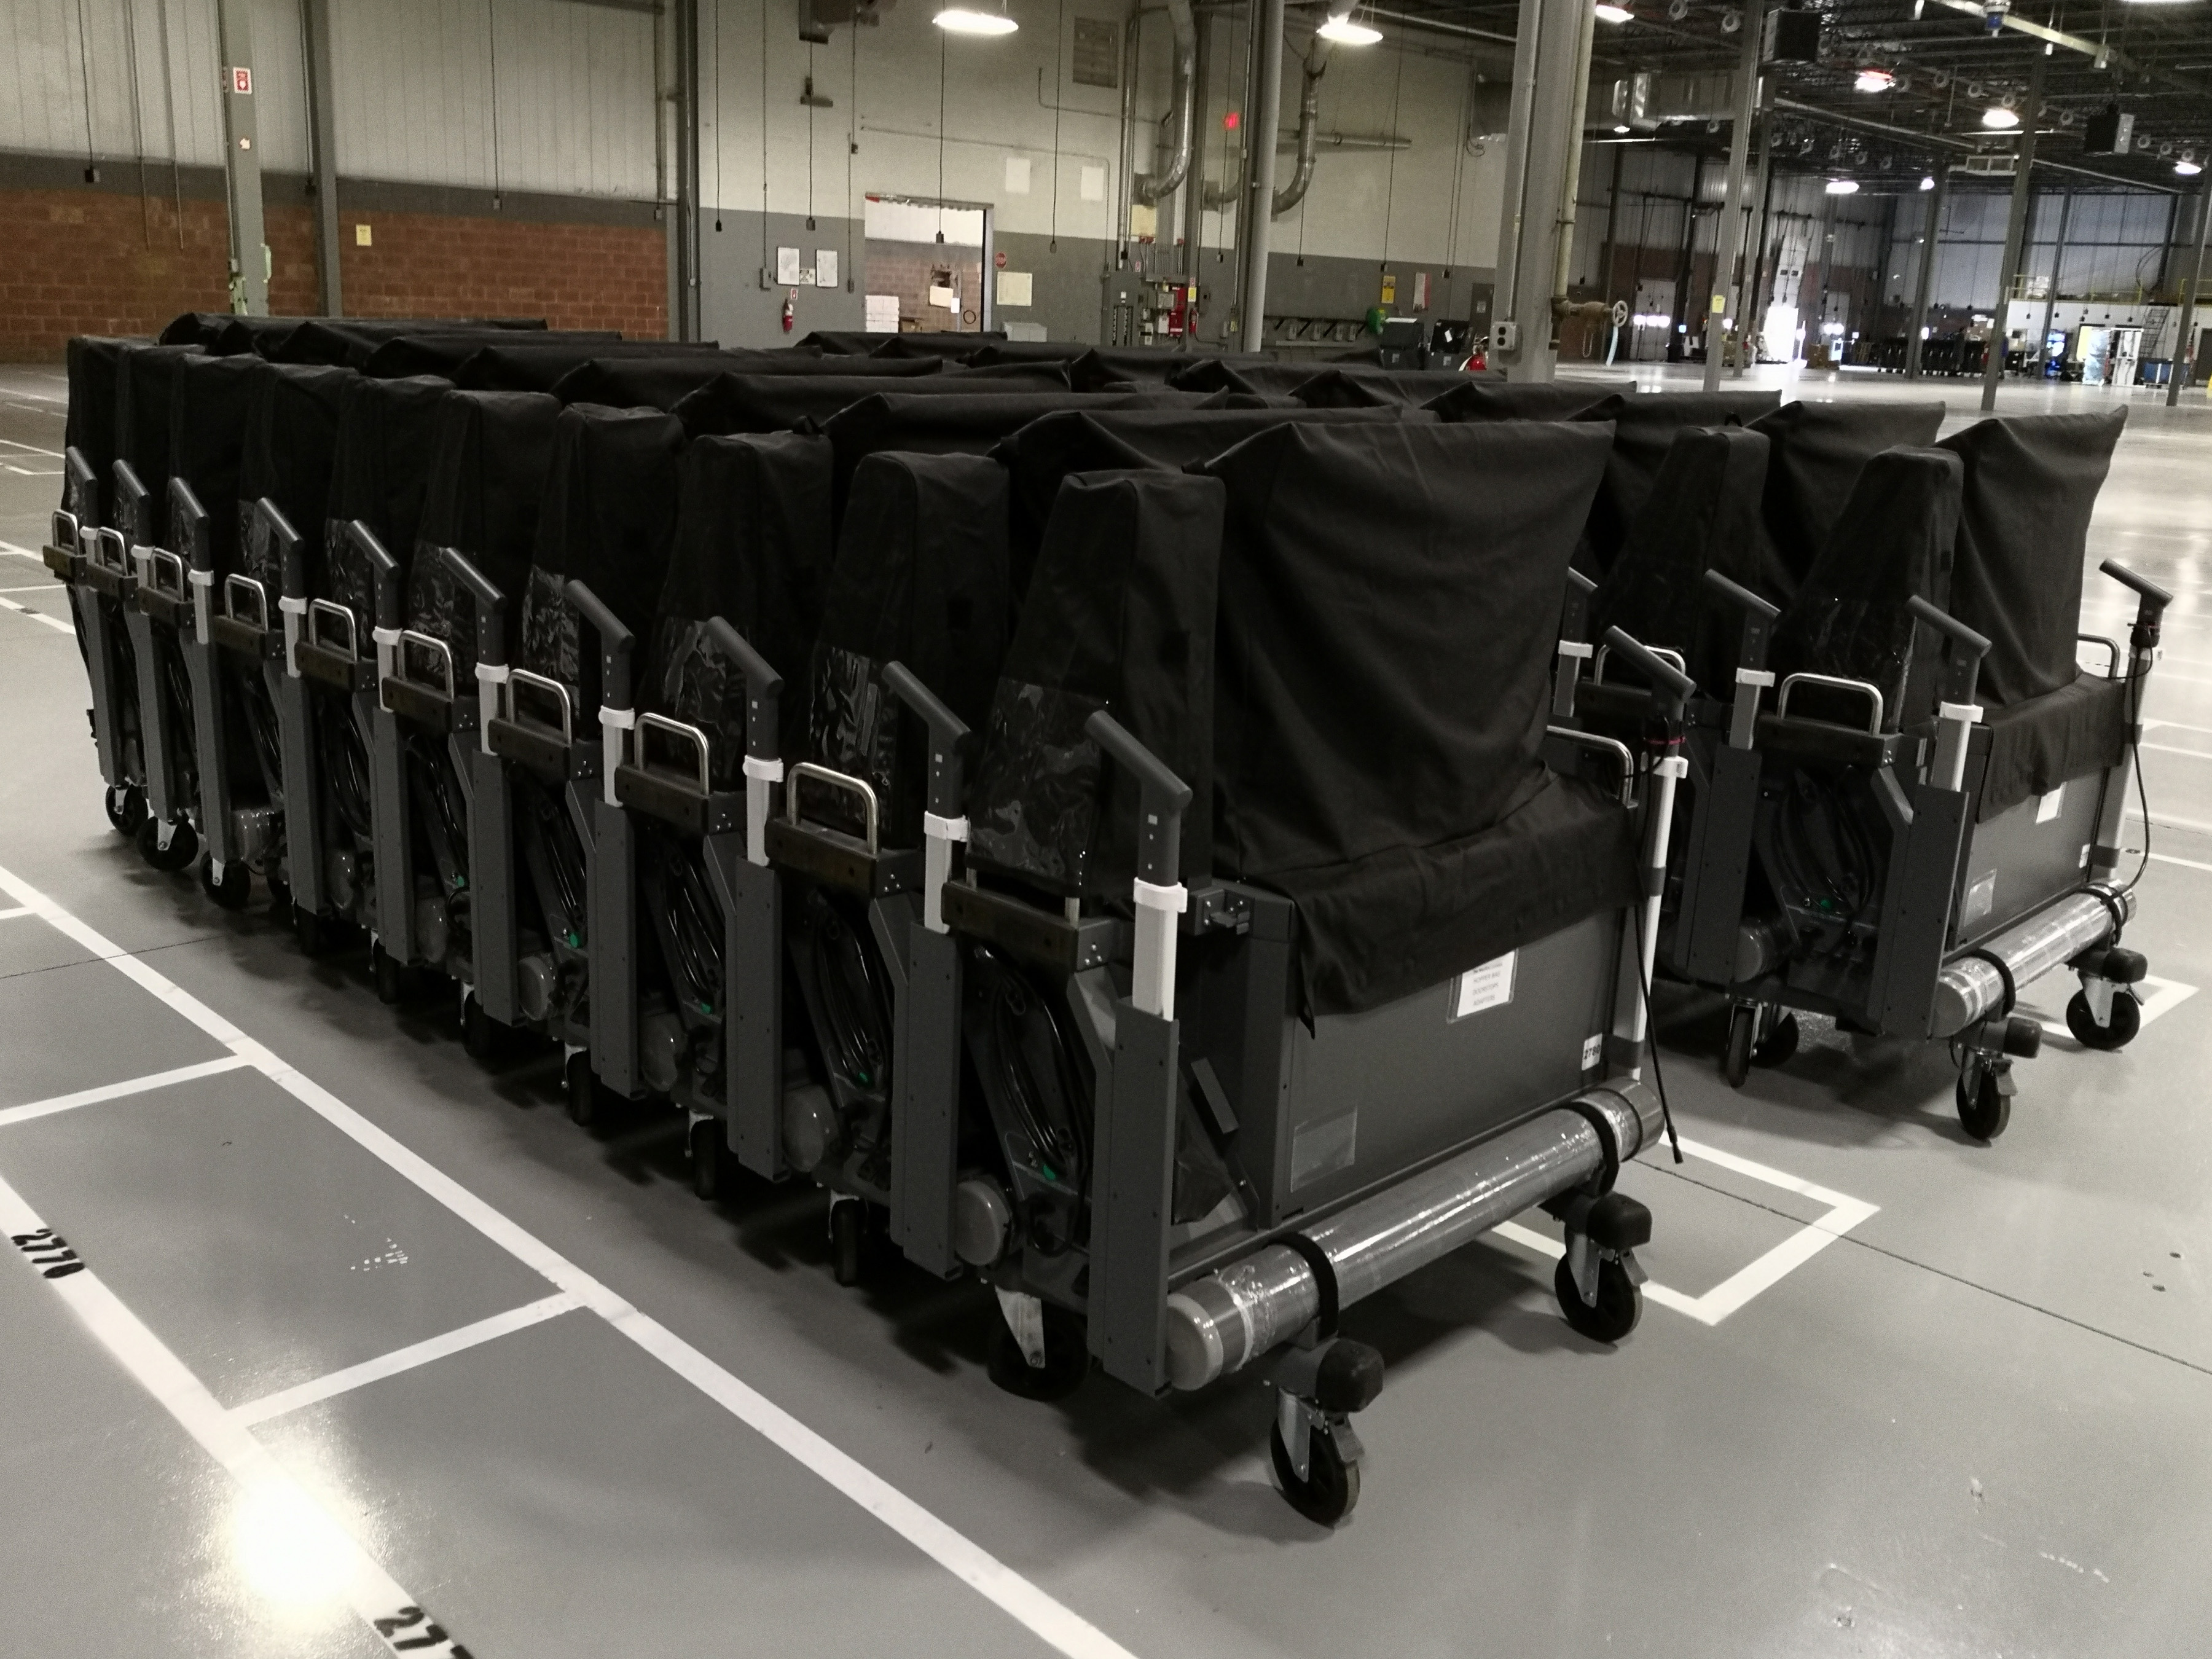 Philadephia's voting equipment in a warehouse